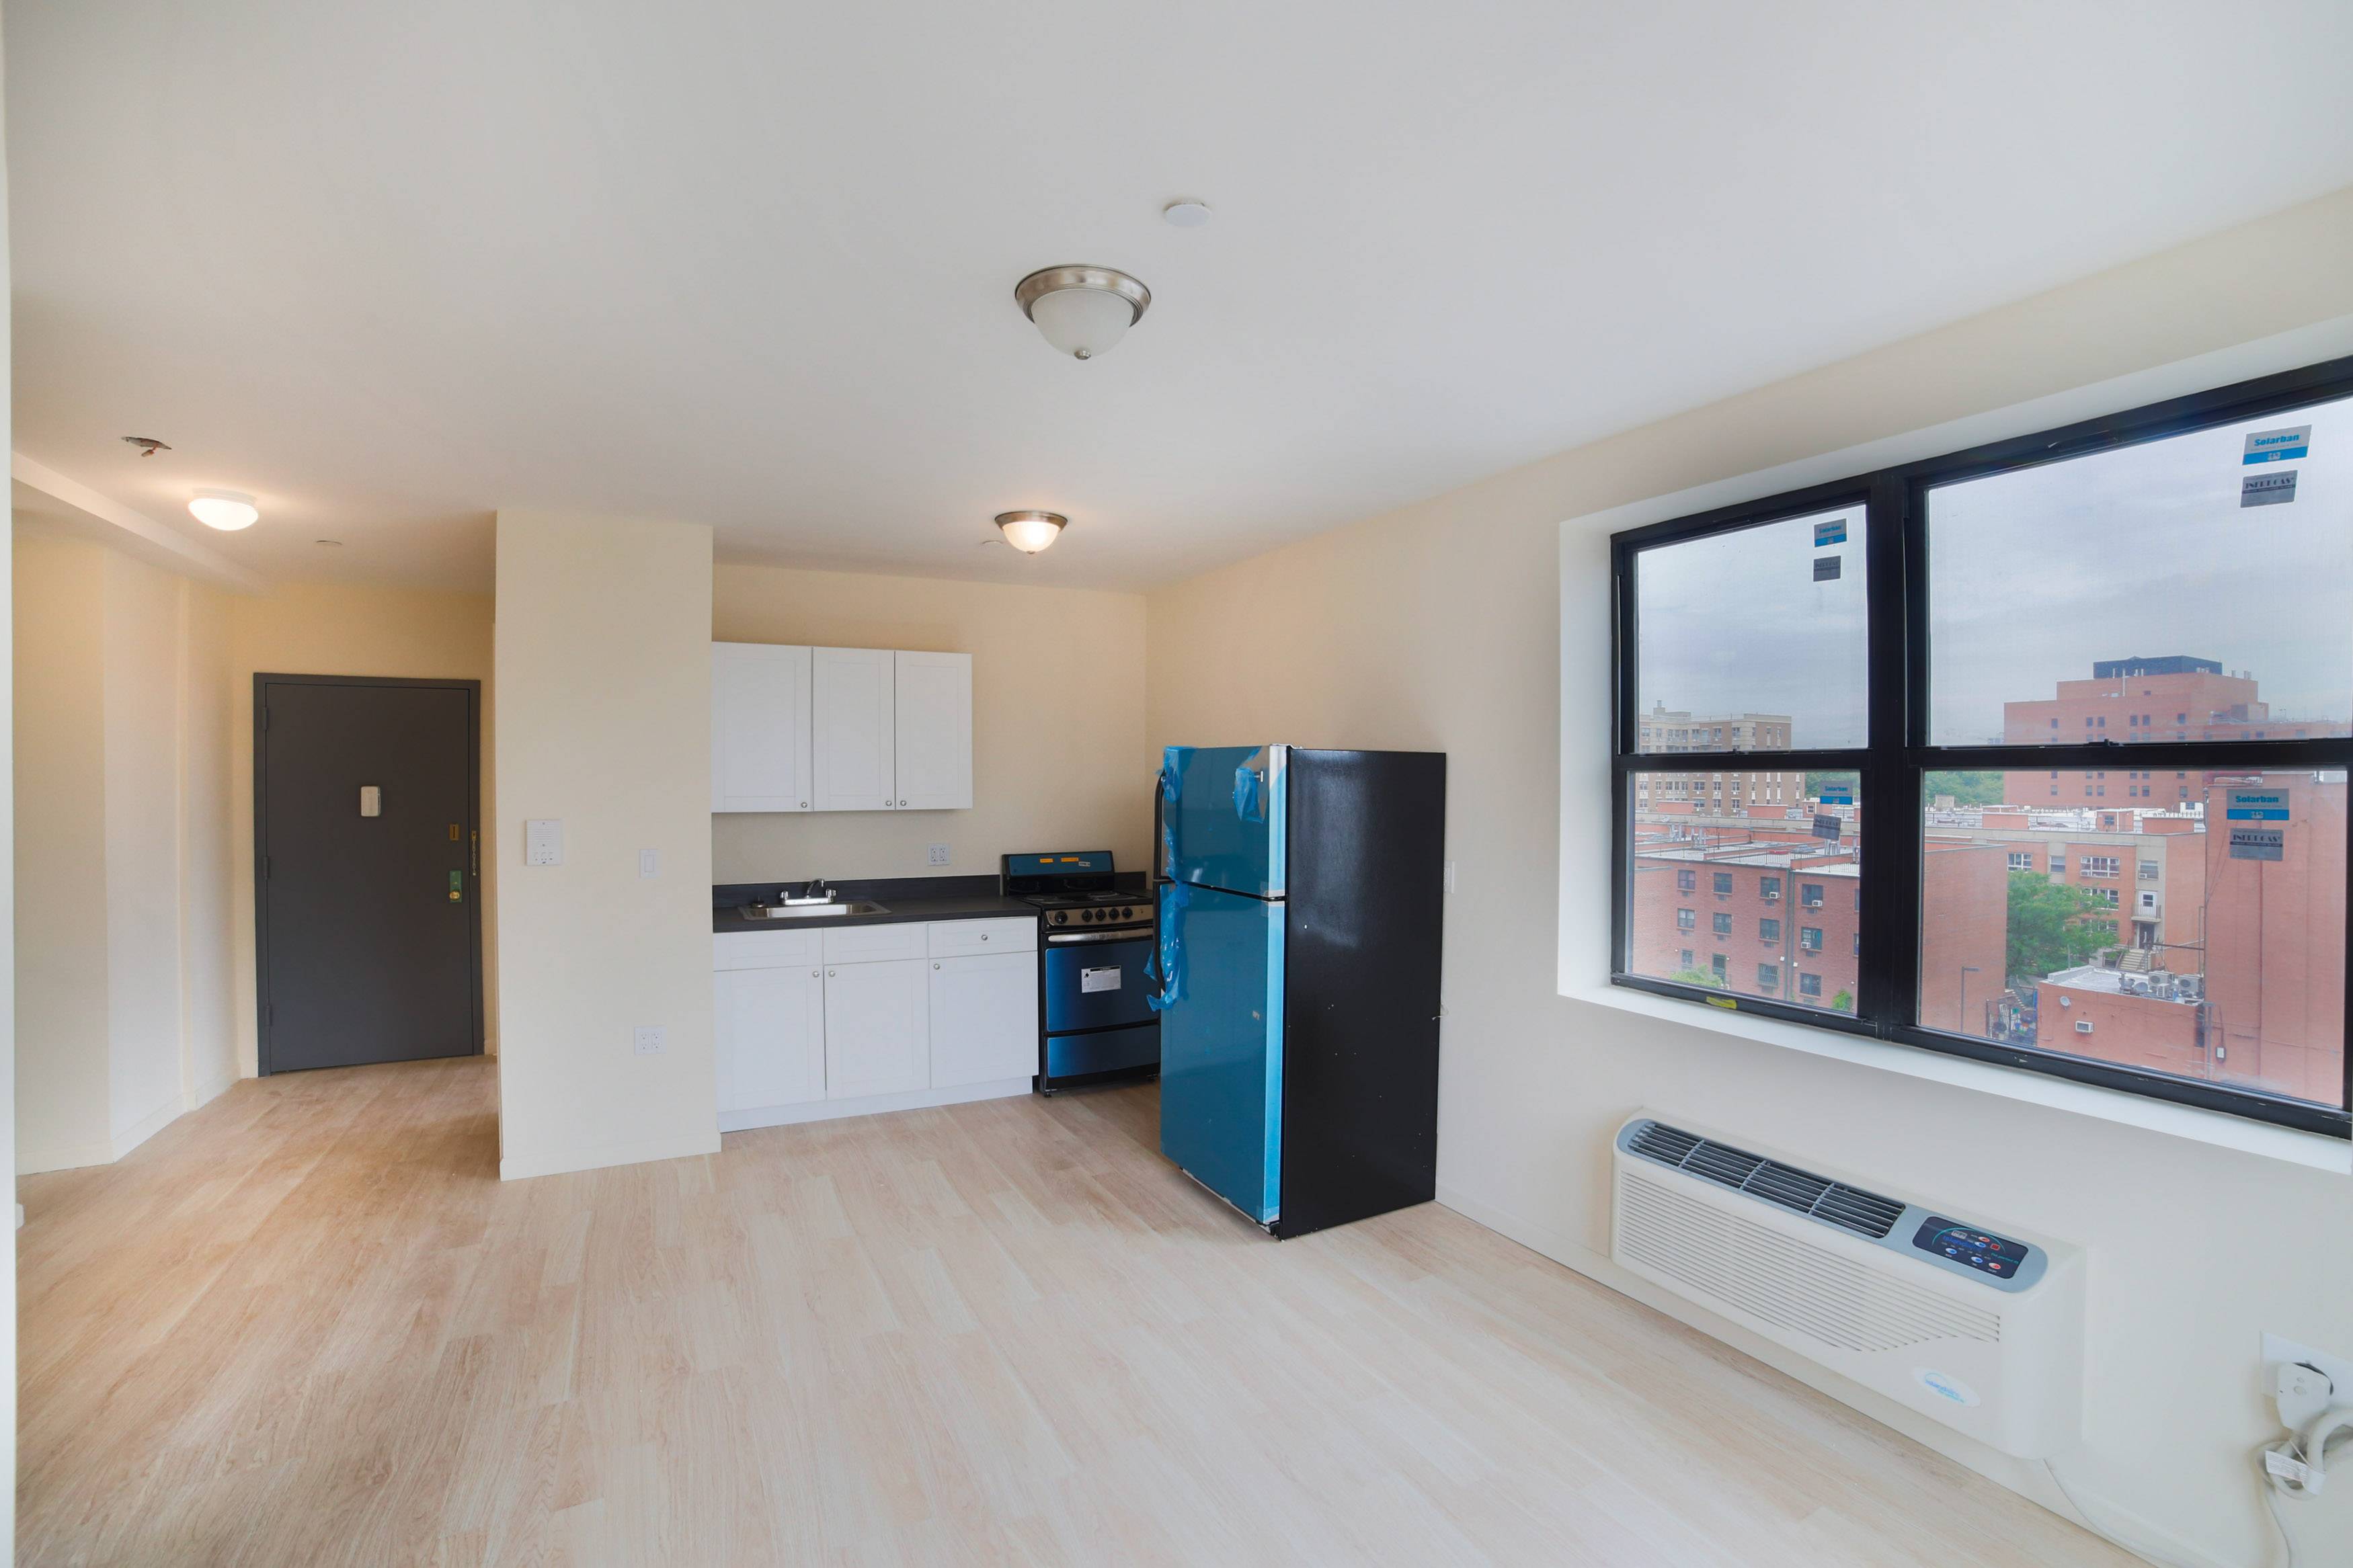 1674 Park Ave: NO FEE! New Development Top Floor Corner 2 Bedroom Apartment For Lease in Harlem